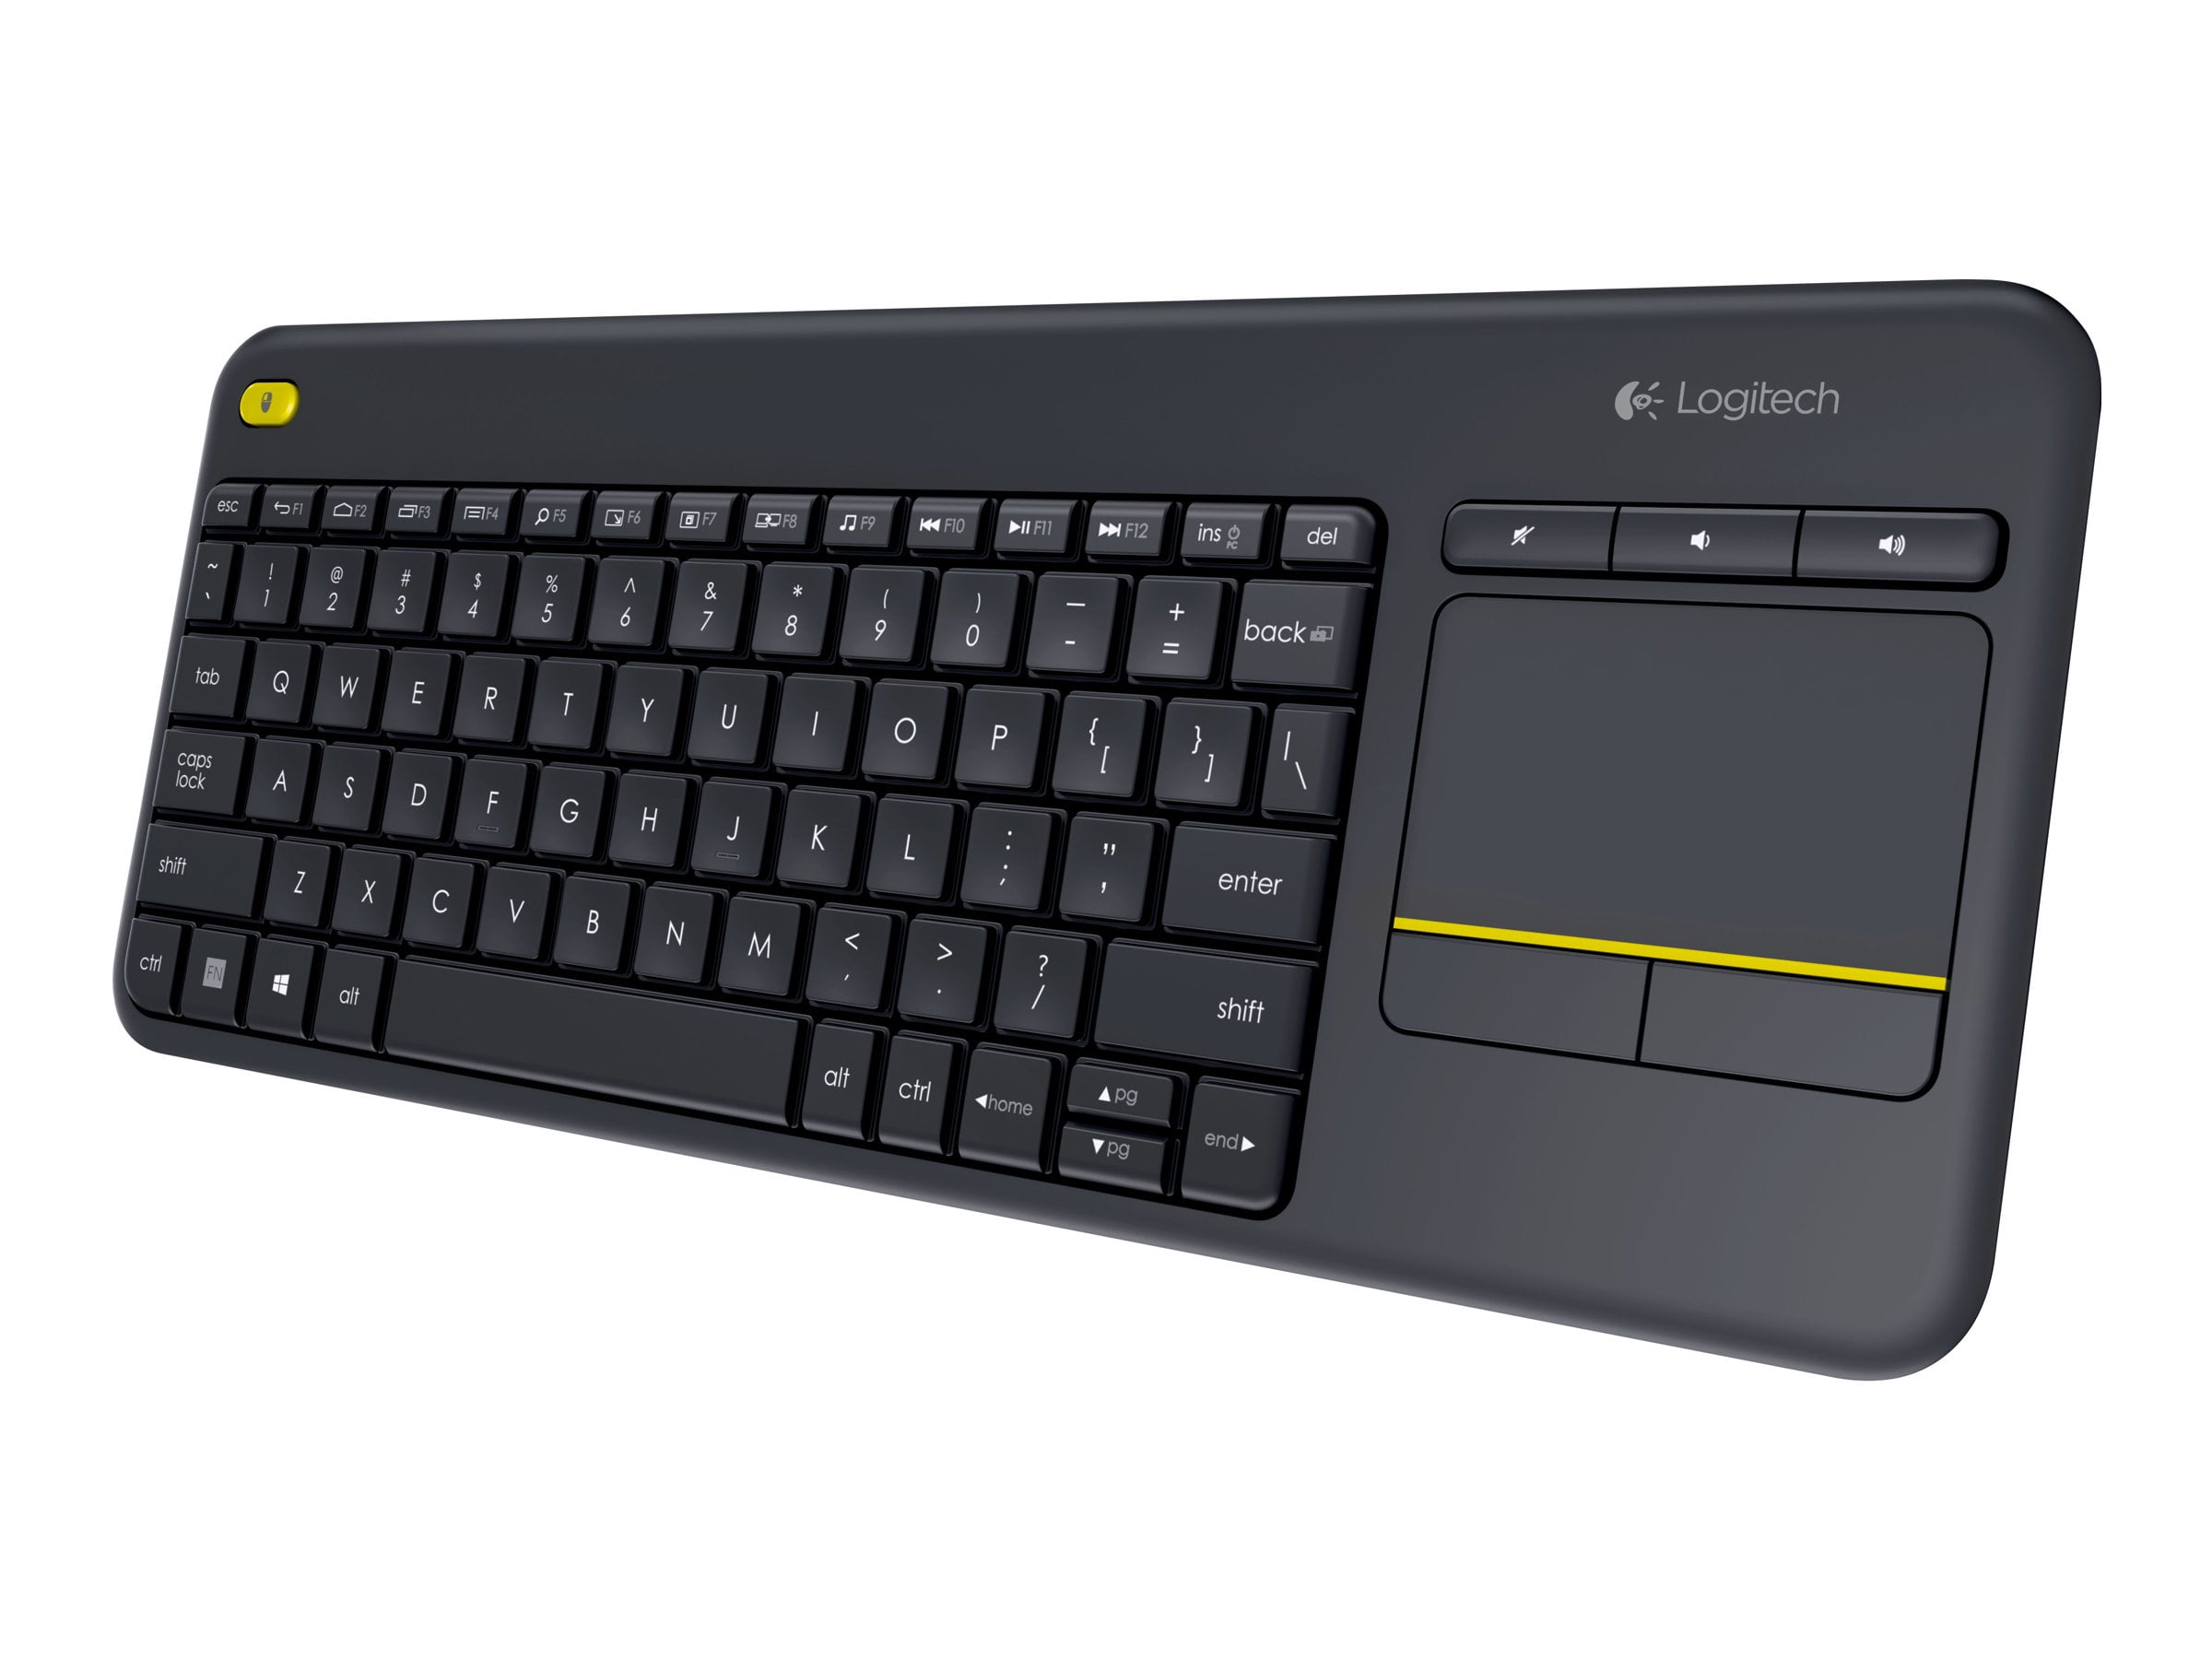 Tilsyneladende veltalende galop Logitech WIRELESS TOUCH KEYBOARD K400 PLUS HTPC keyboard for PC connected  TVs - Walmart.com